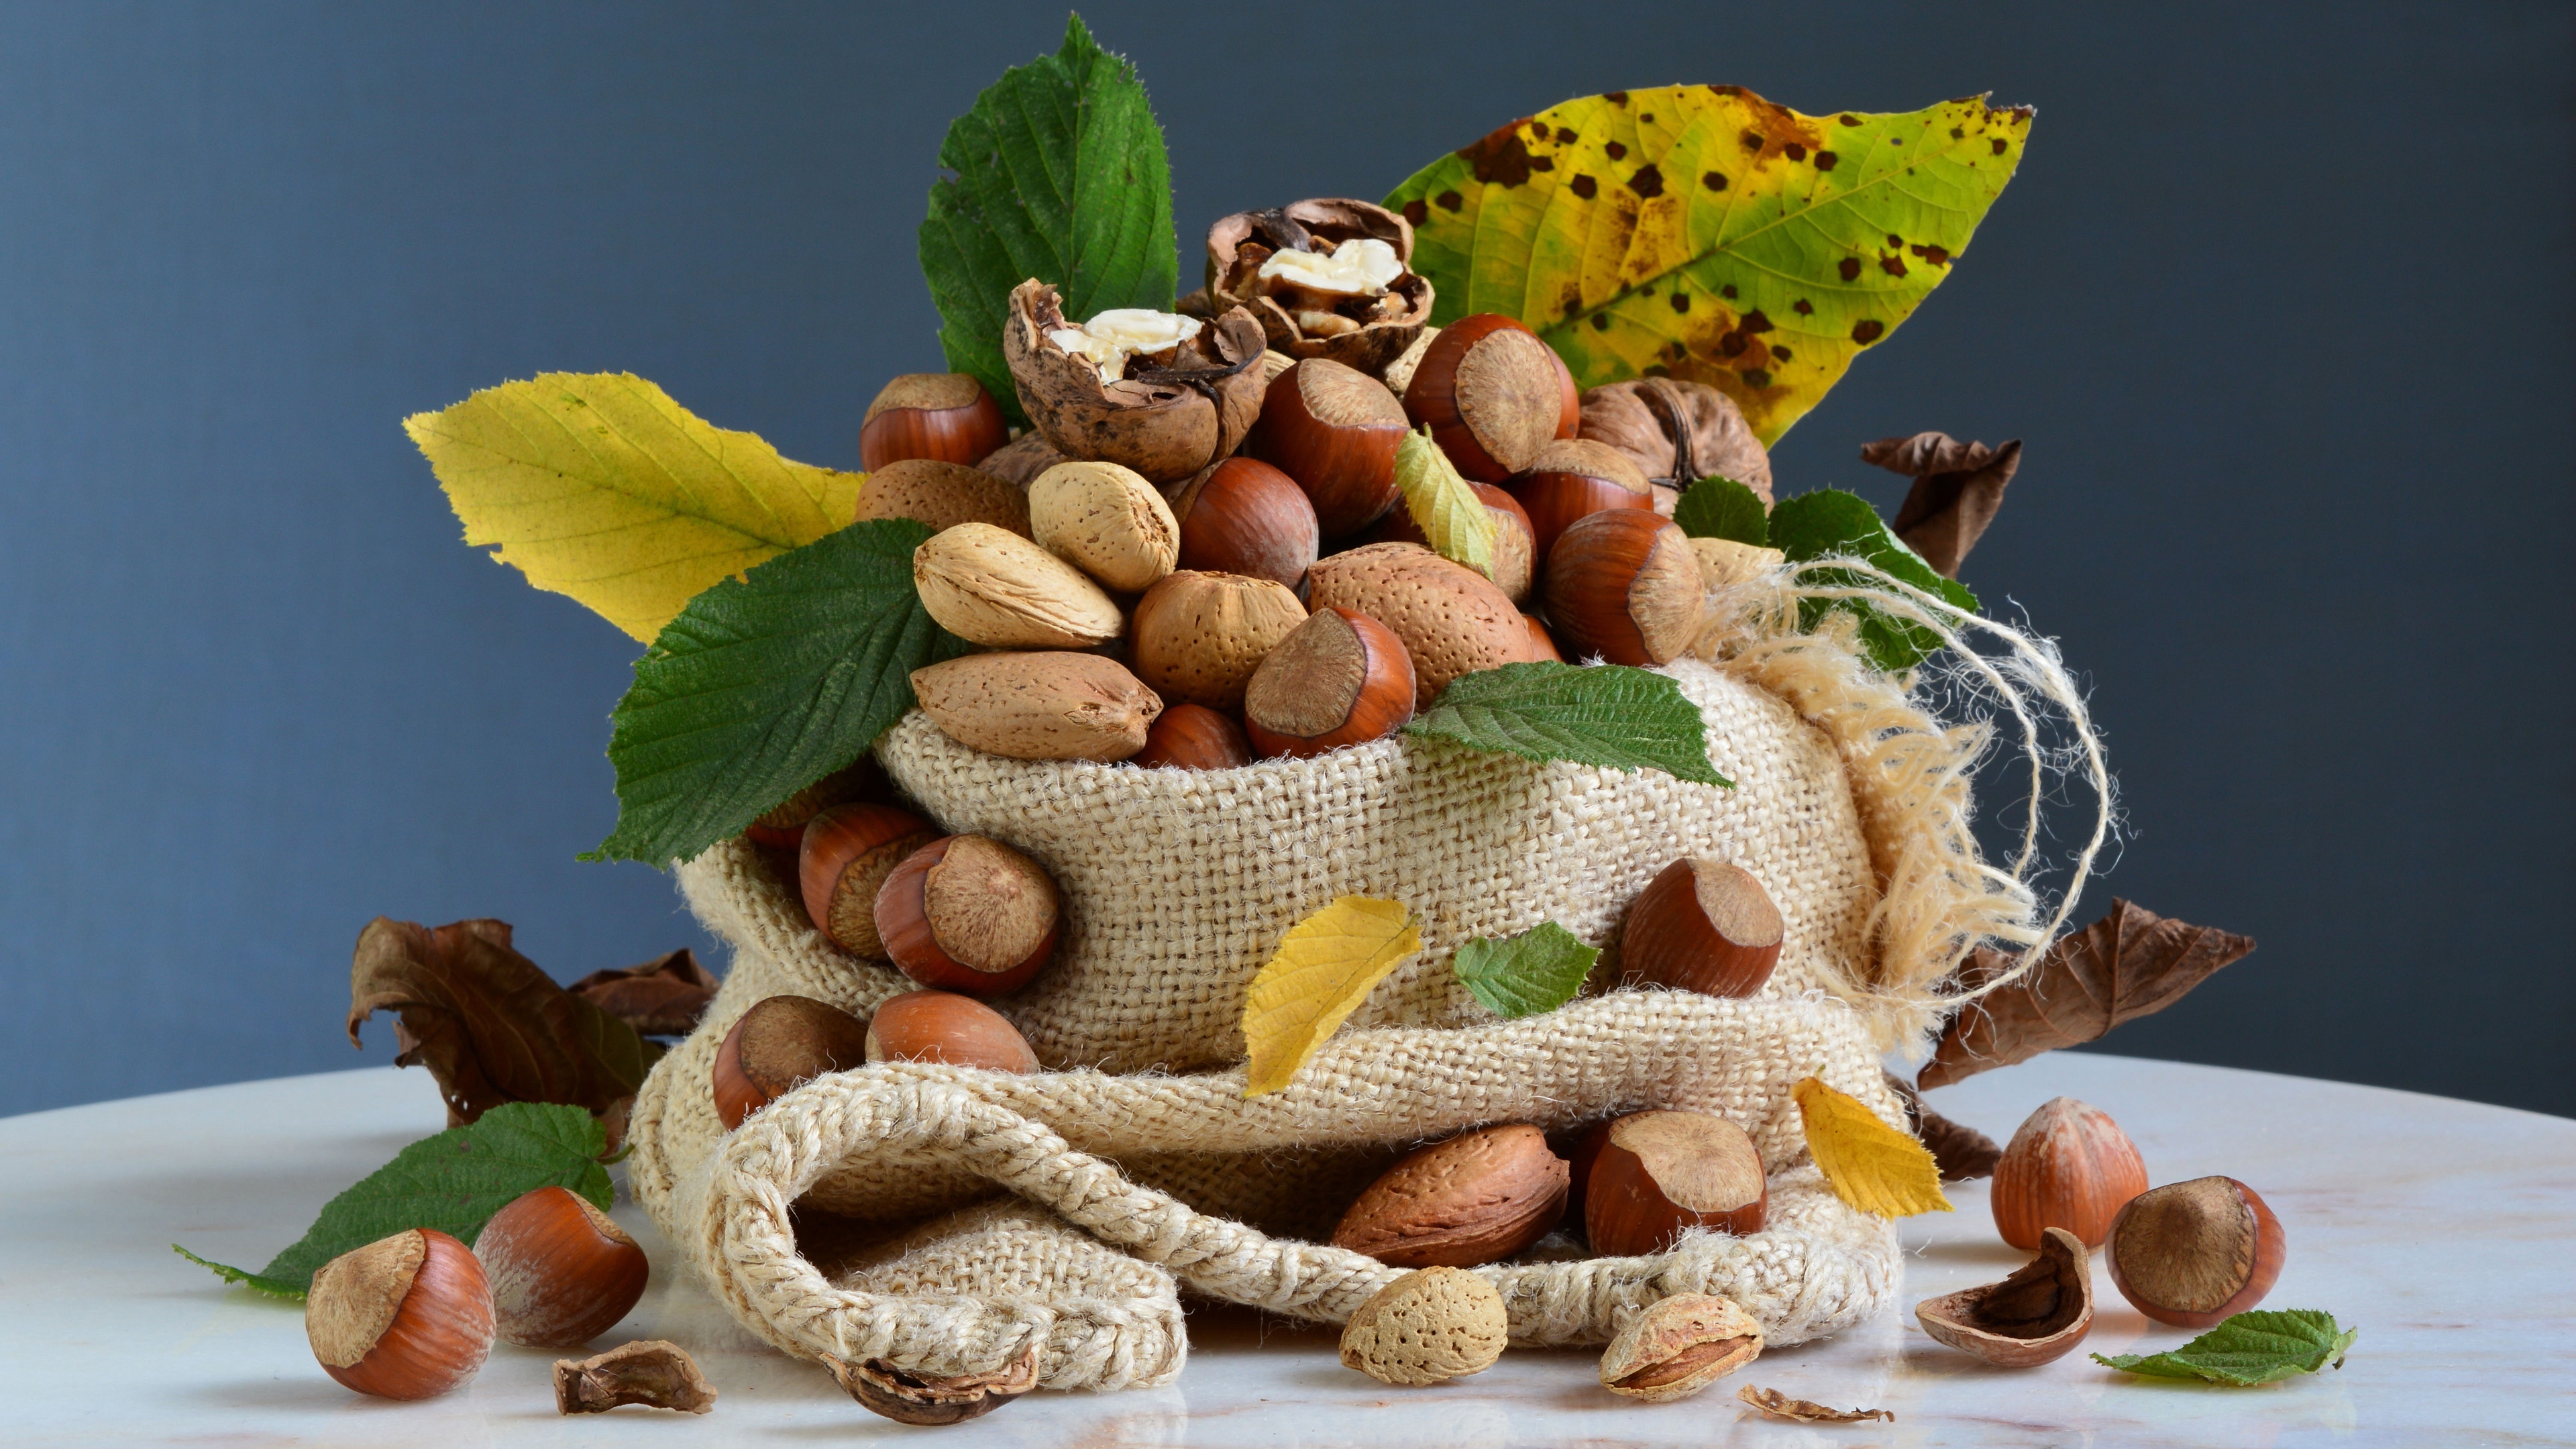 Hazelnuts: Contain alpha-tocopherol, a vitamin E type rich in antioxidants. 3840x2160 4K Wallpaper.